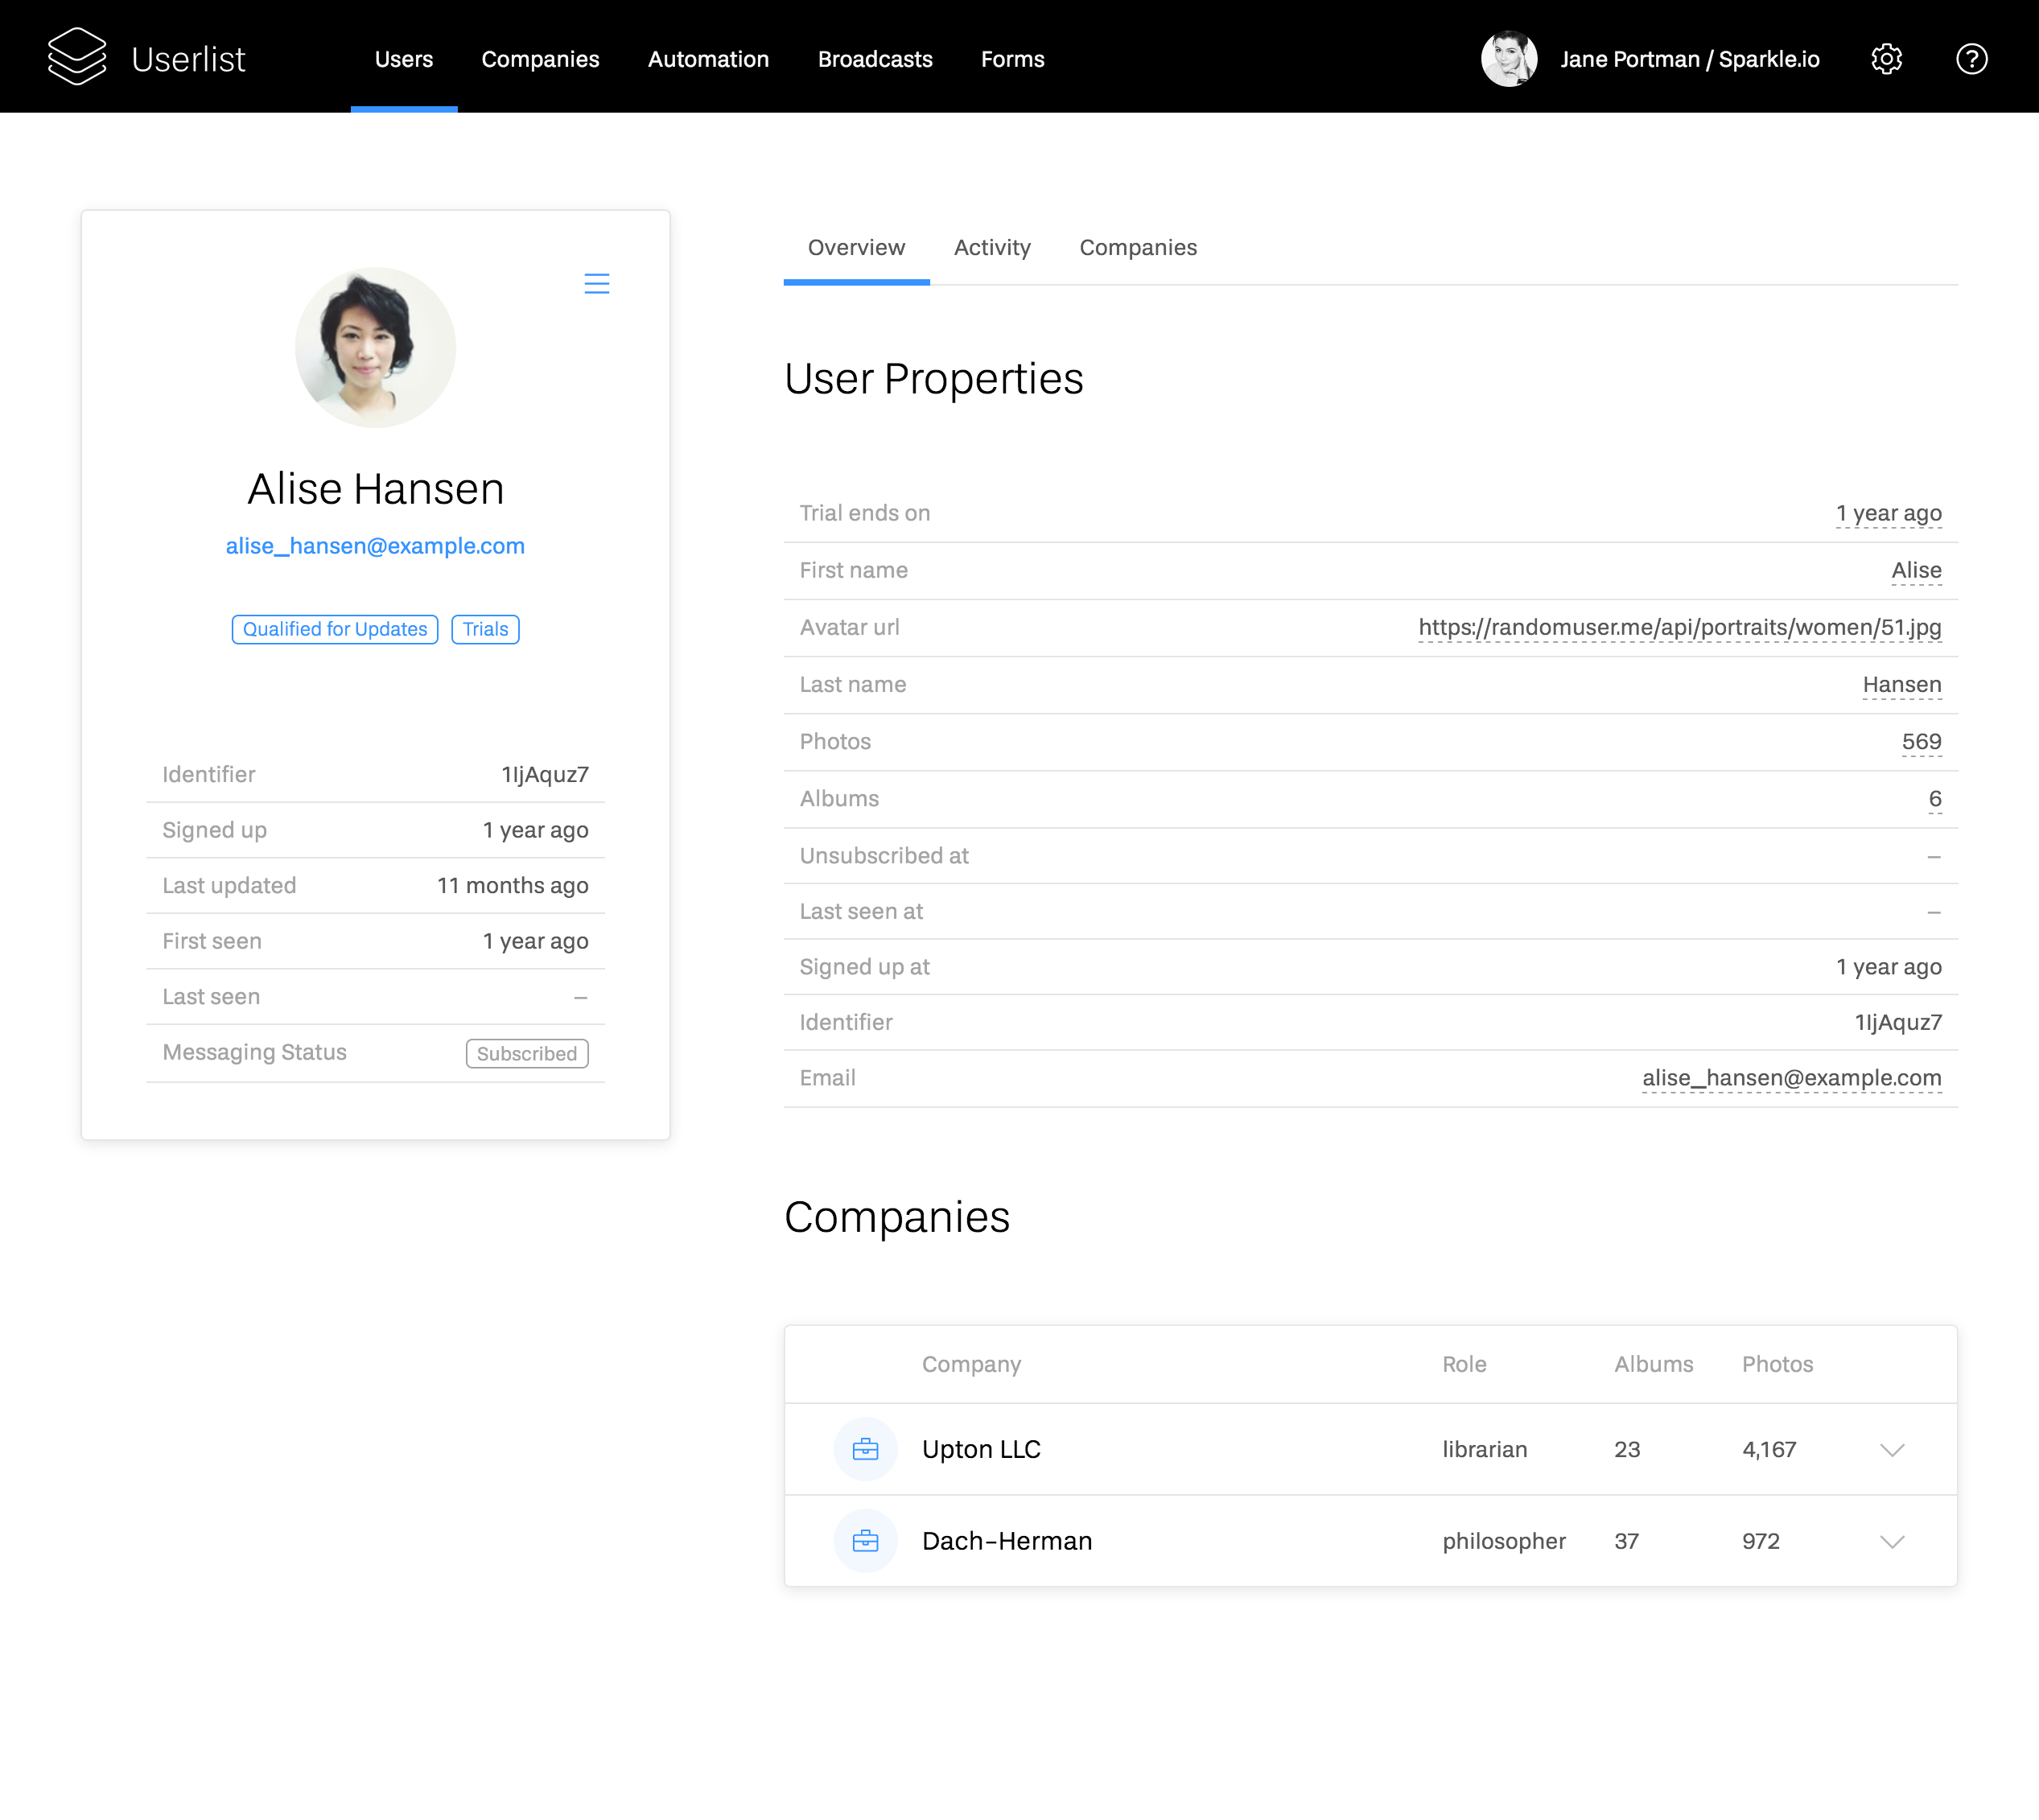 Explore individual user profiles